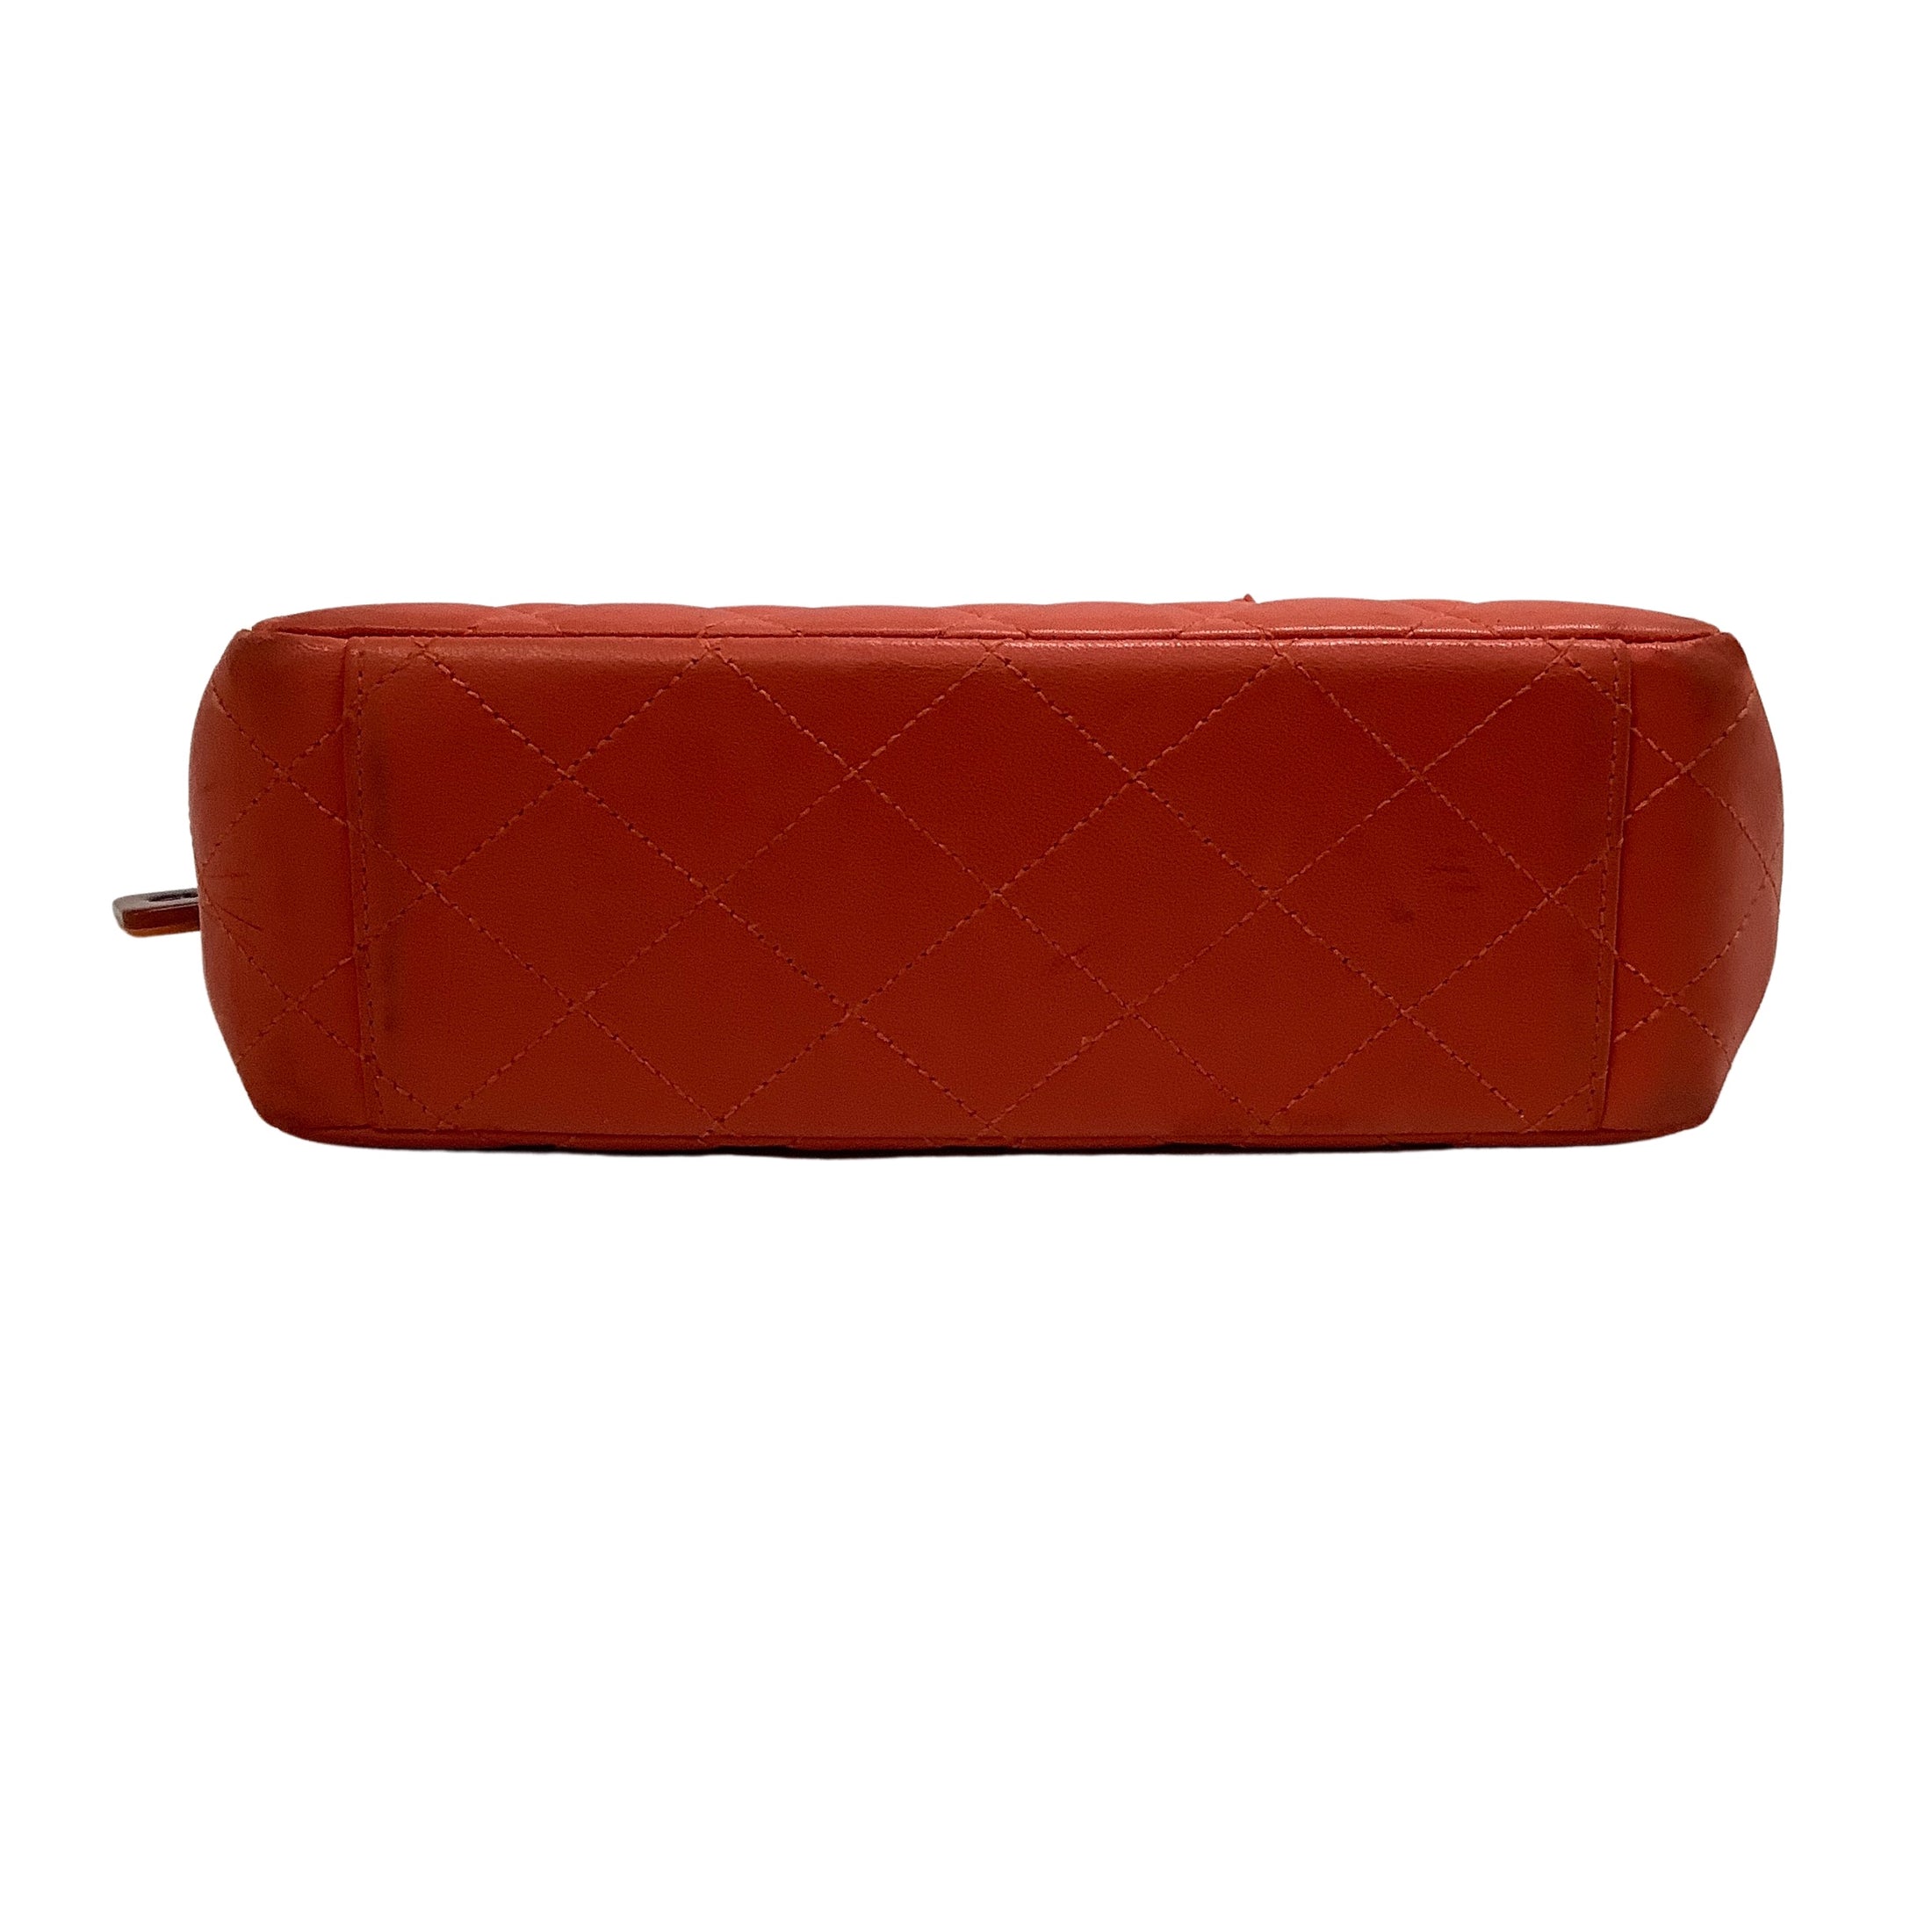 Chanel Vintage Orange Lambskin Leather Quilted Shoulder Bag with Tortoise Acrylic Hardware